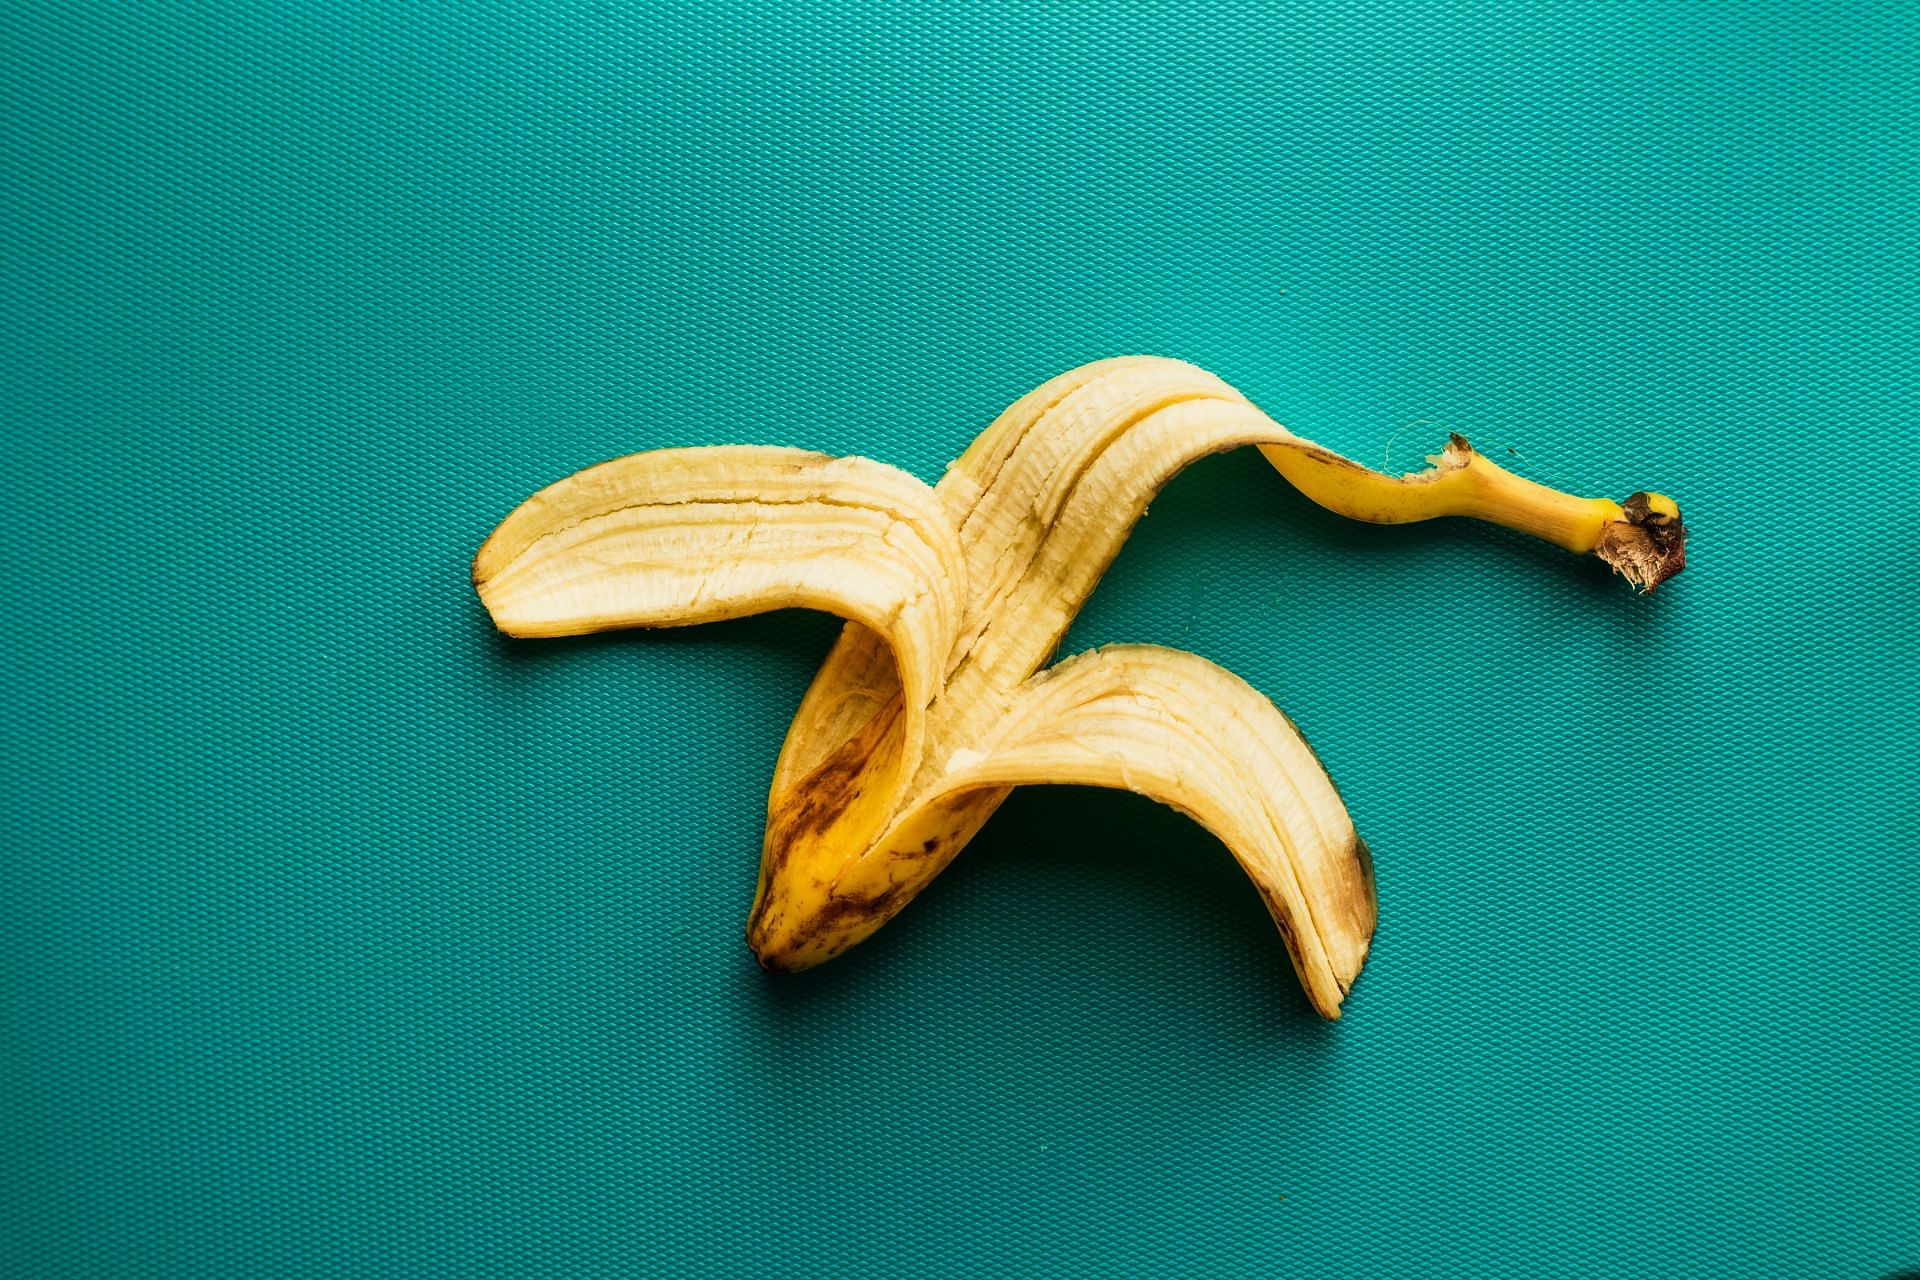 Applying banana peel can be very beneficial. (Image via Unsplash/Louis Hansel)